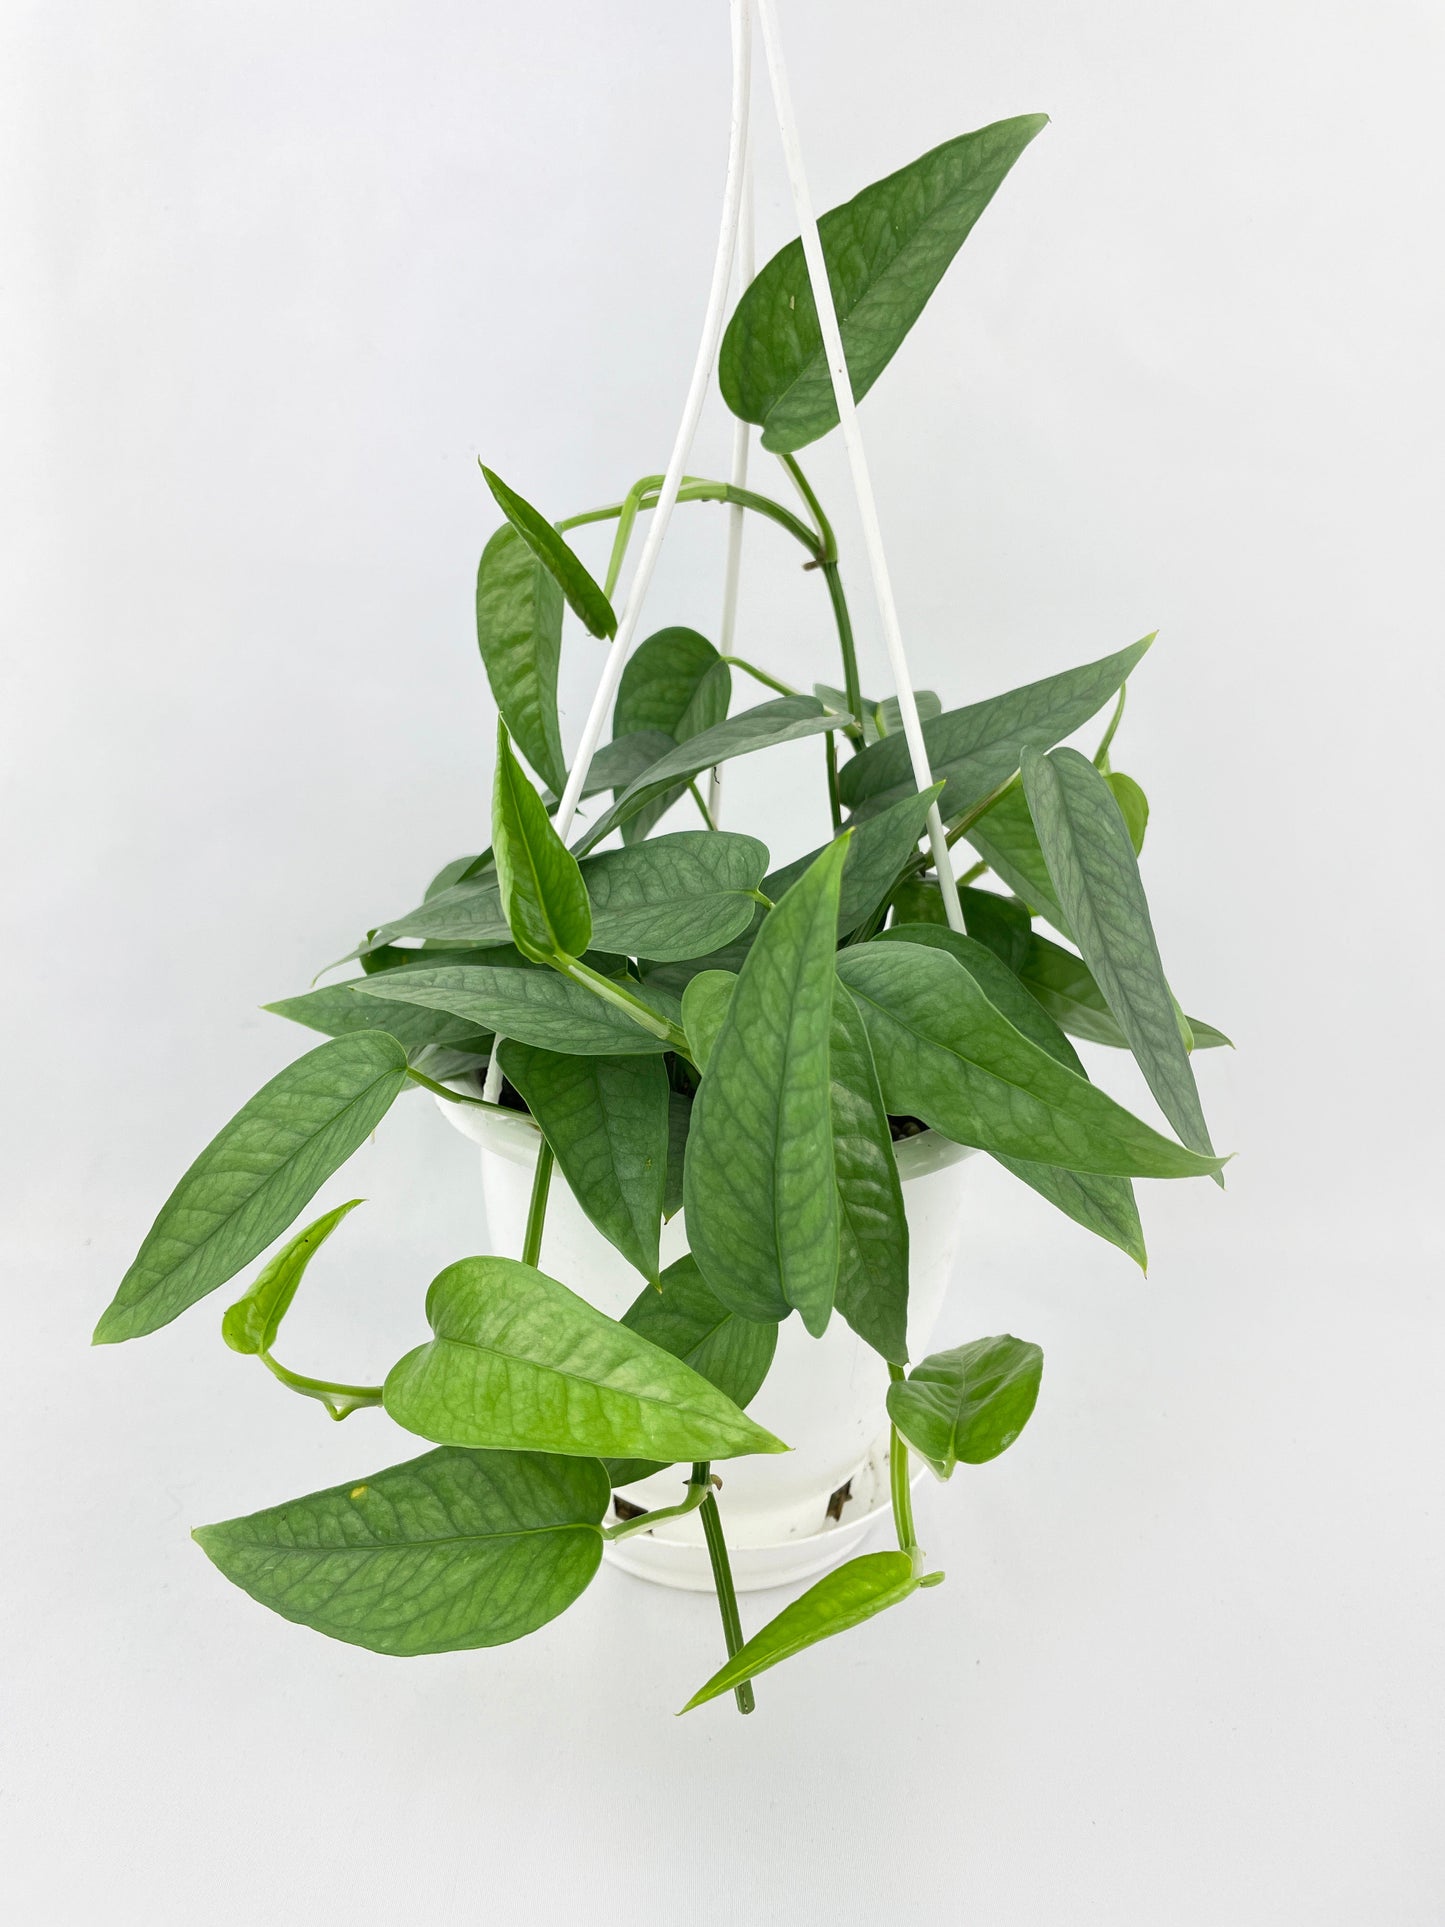 Epipremnum Pinnatum ‘Cebu Blue’ Pothos by Bumble Plants